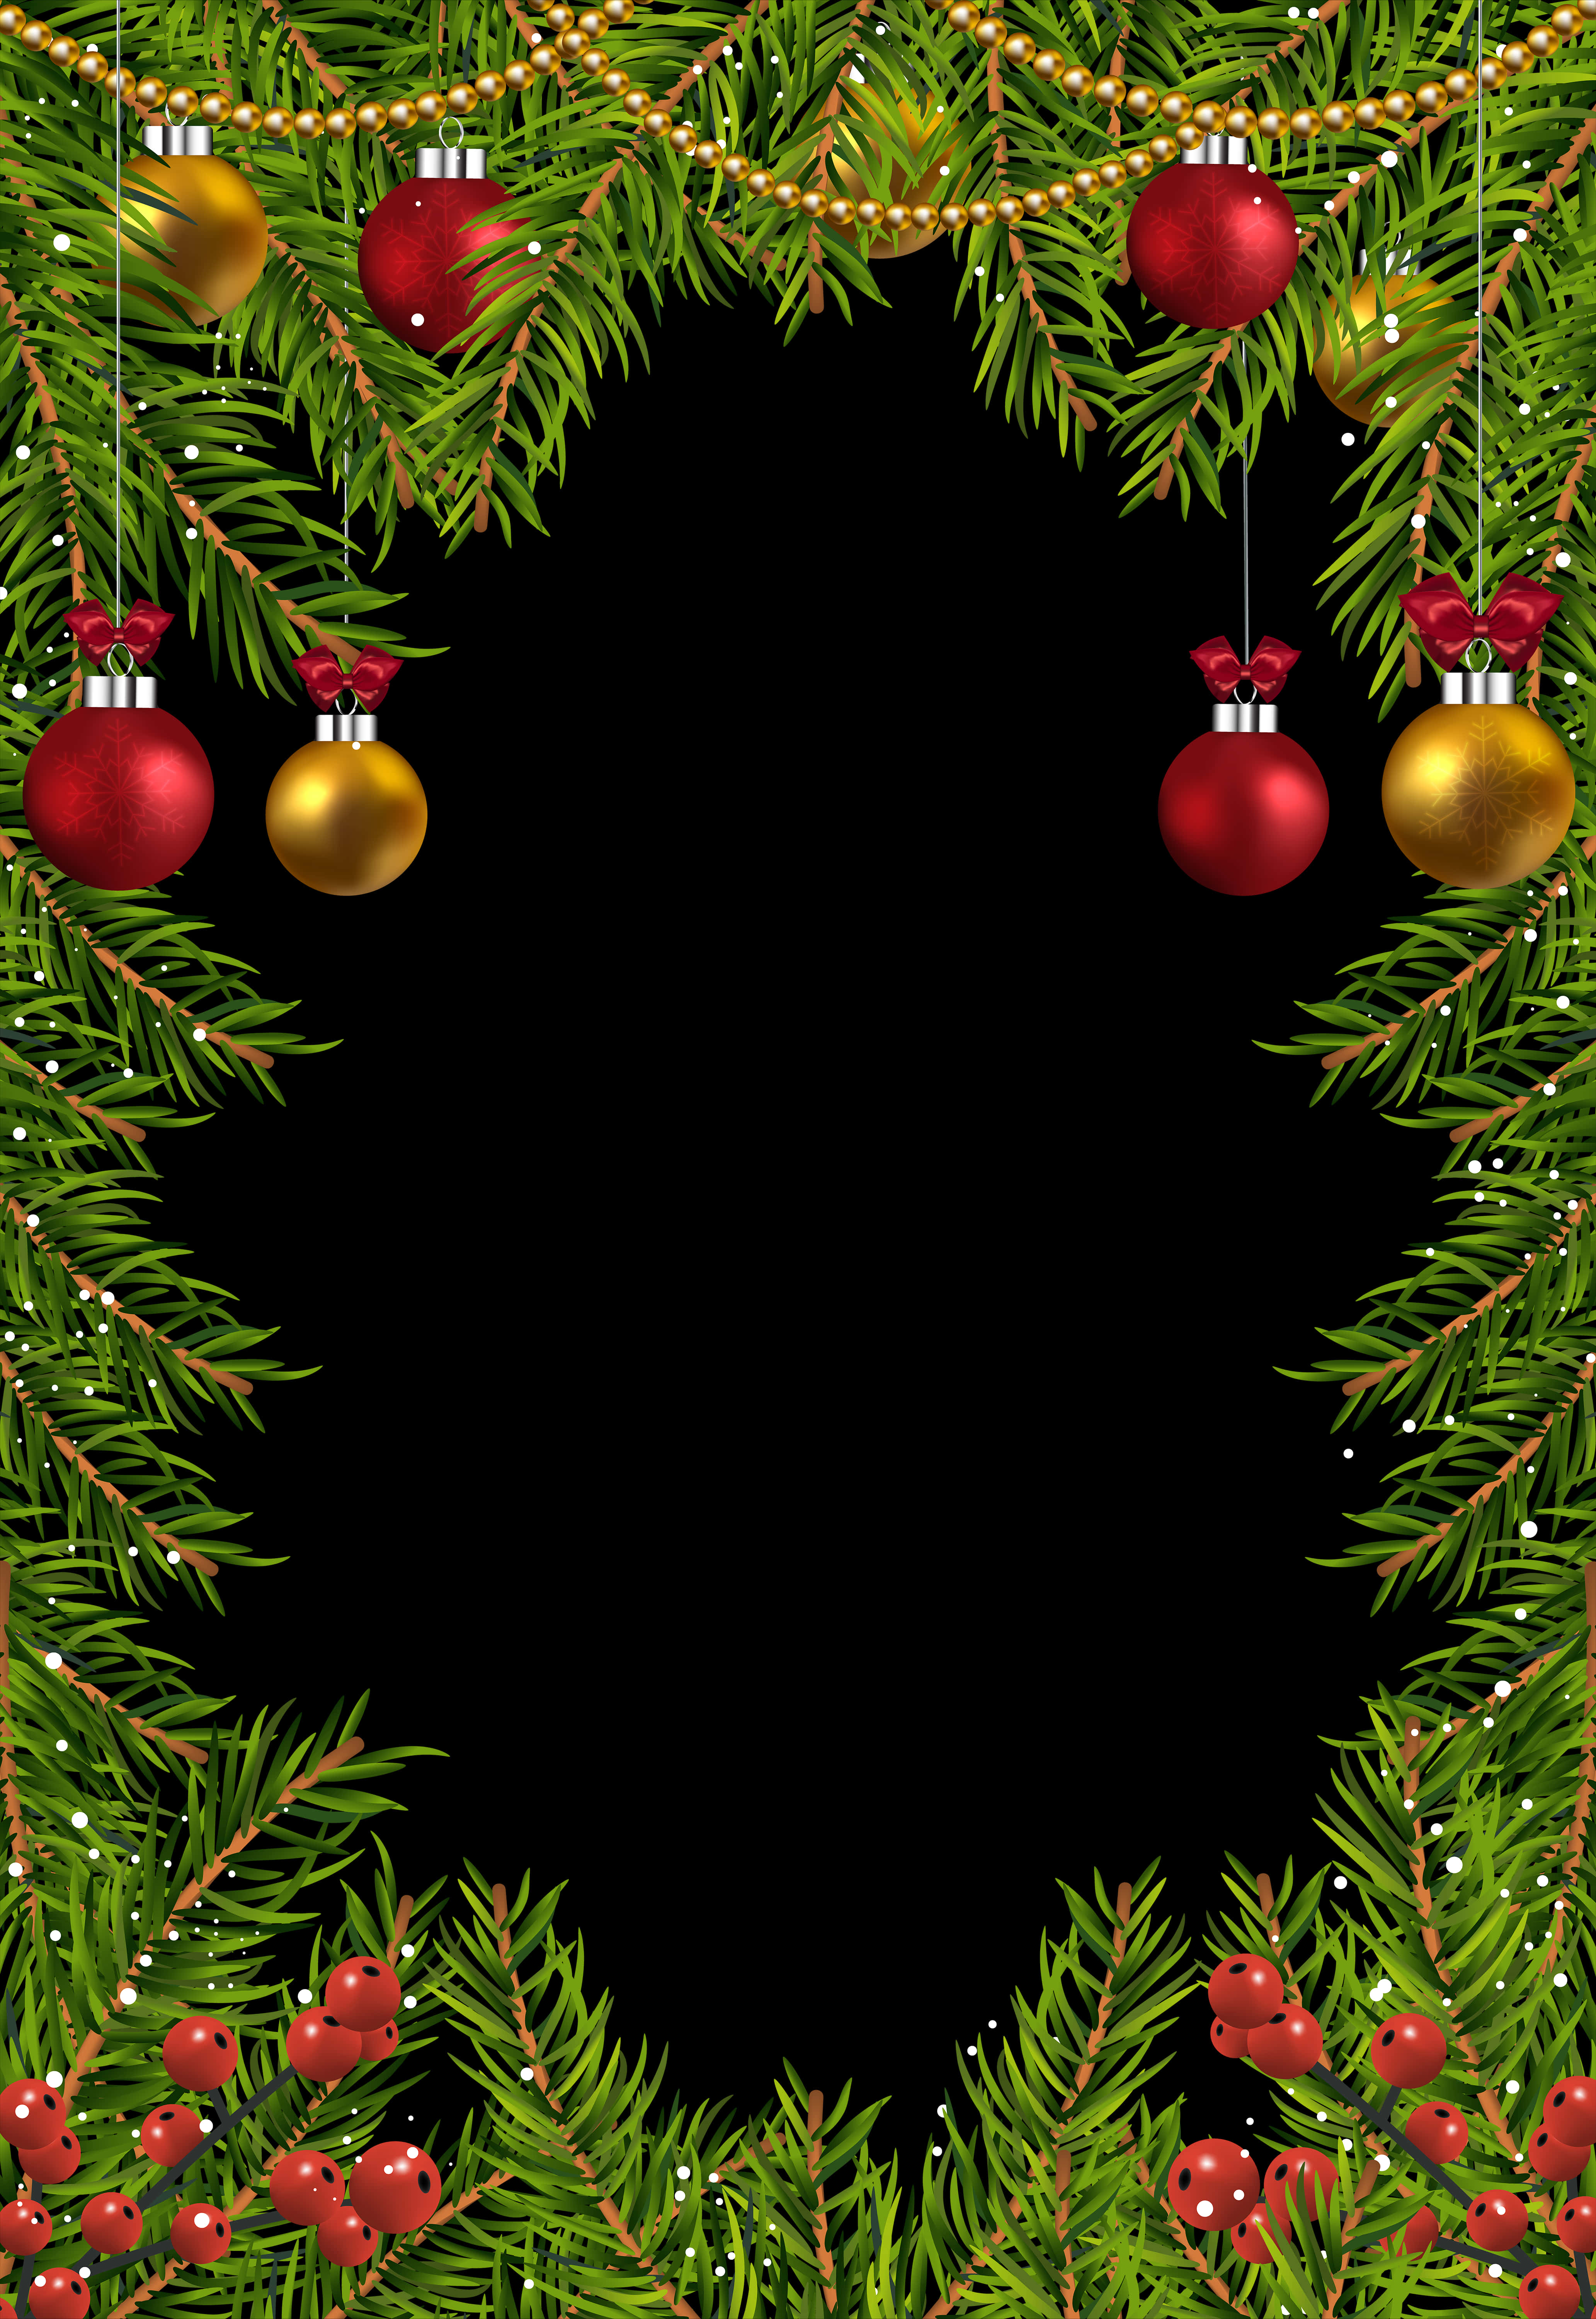 Download Christmas Fir Tree Ornaments Border Design | Wallpapers.com